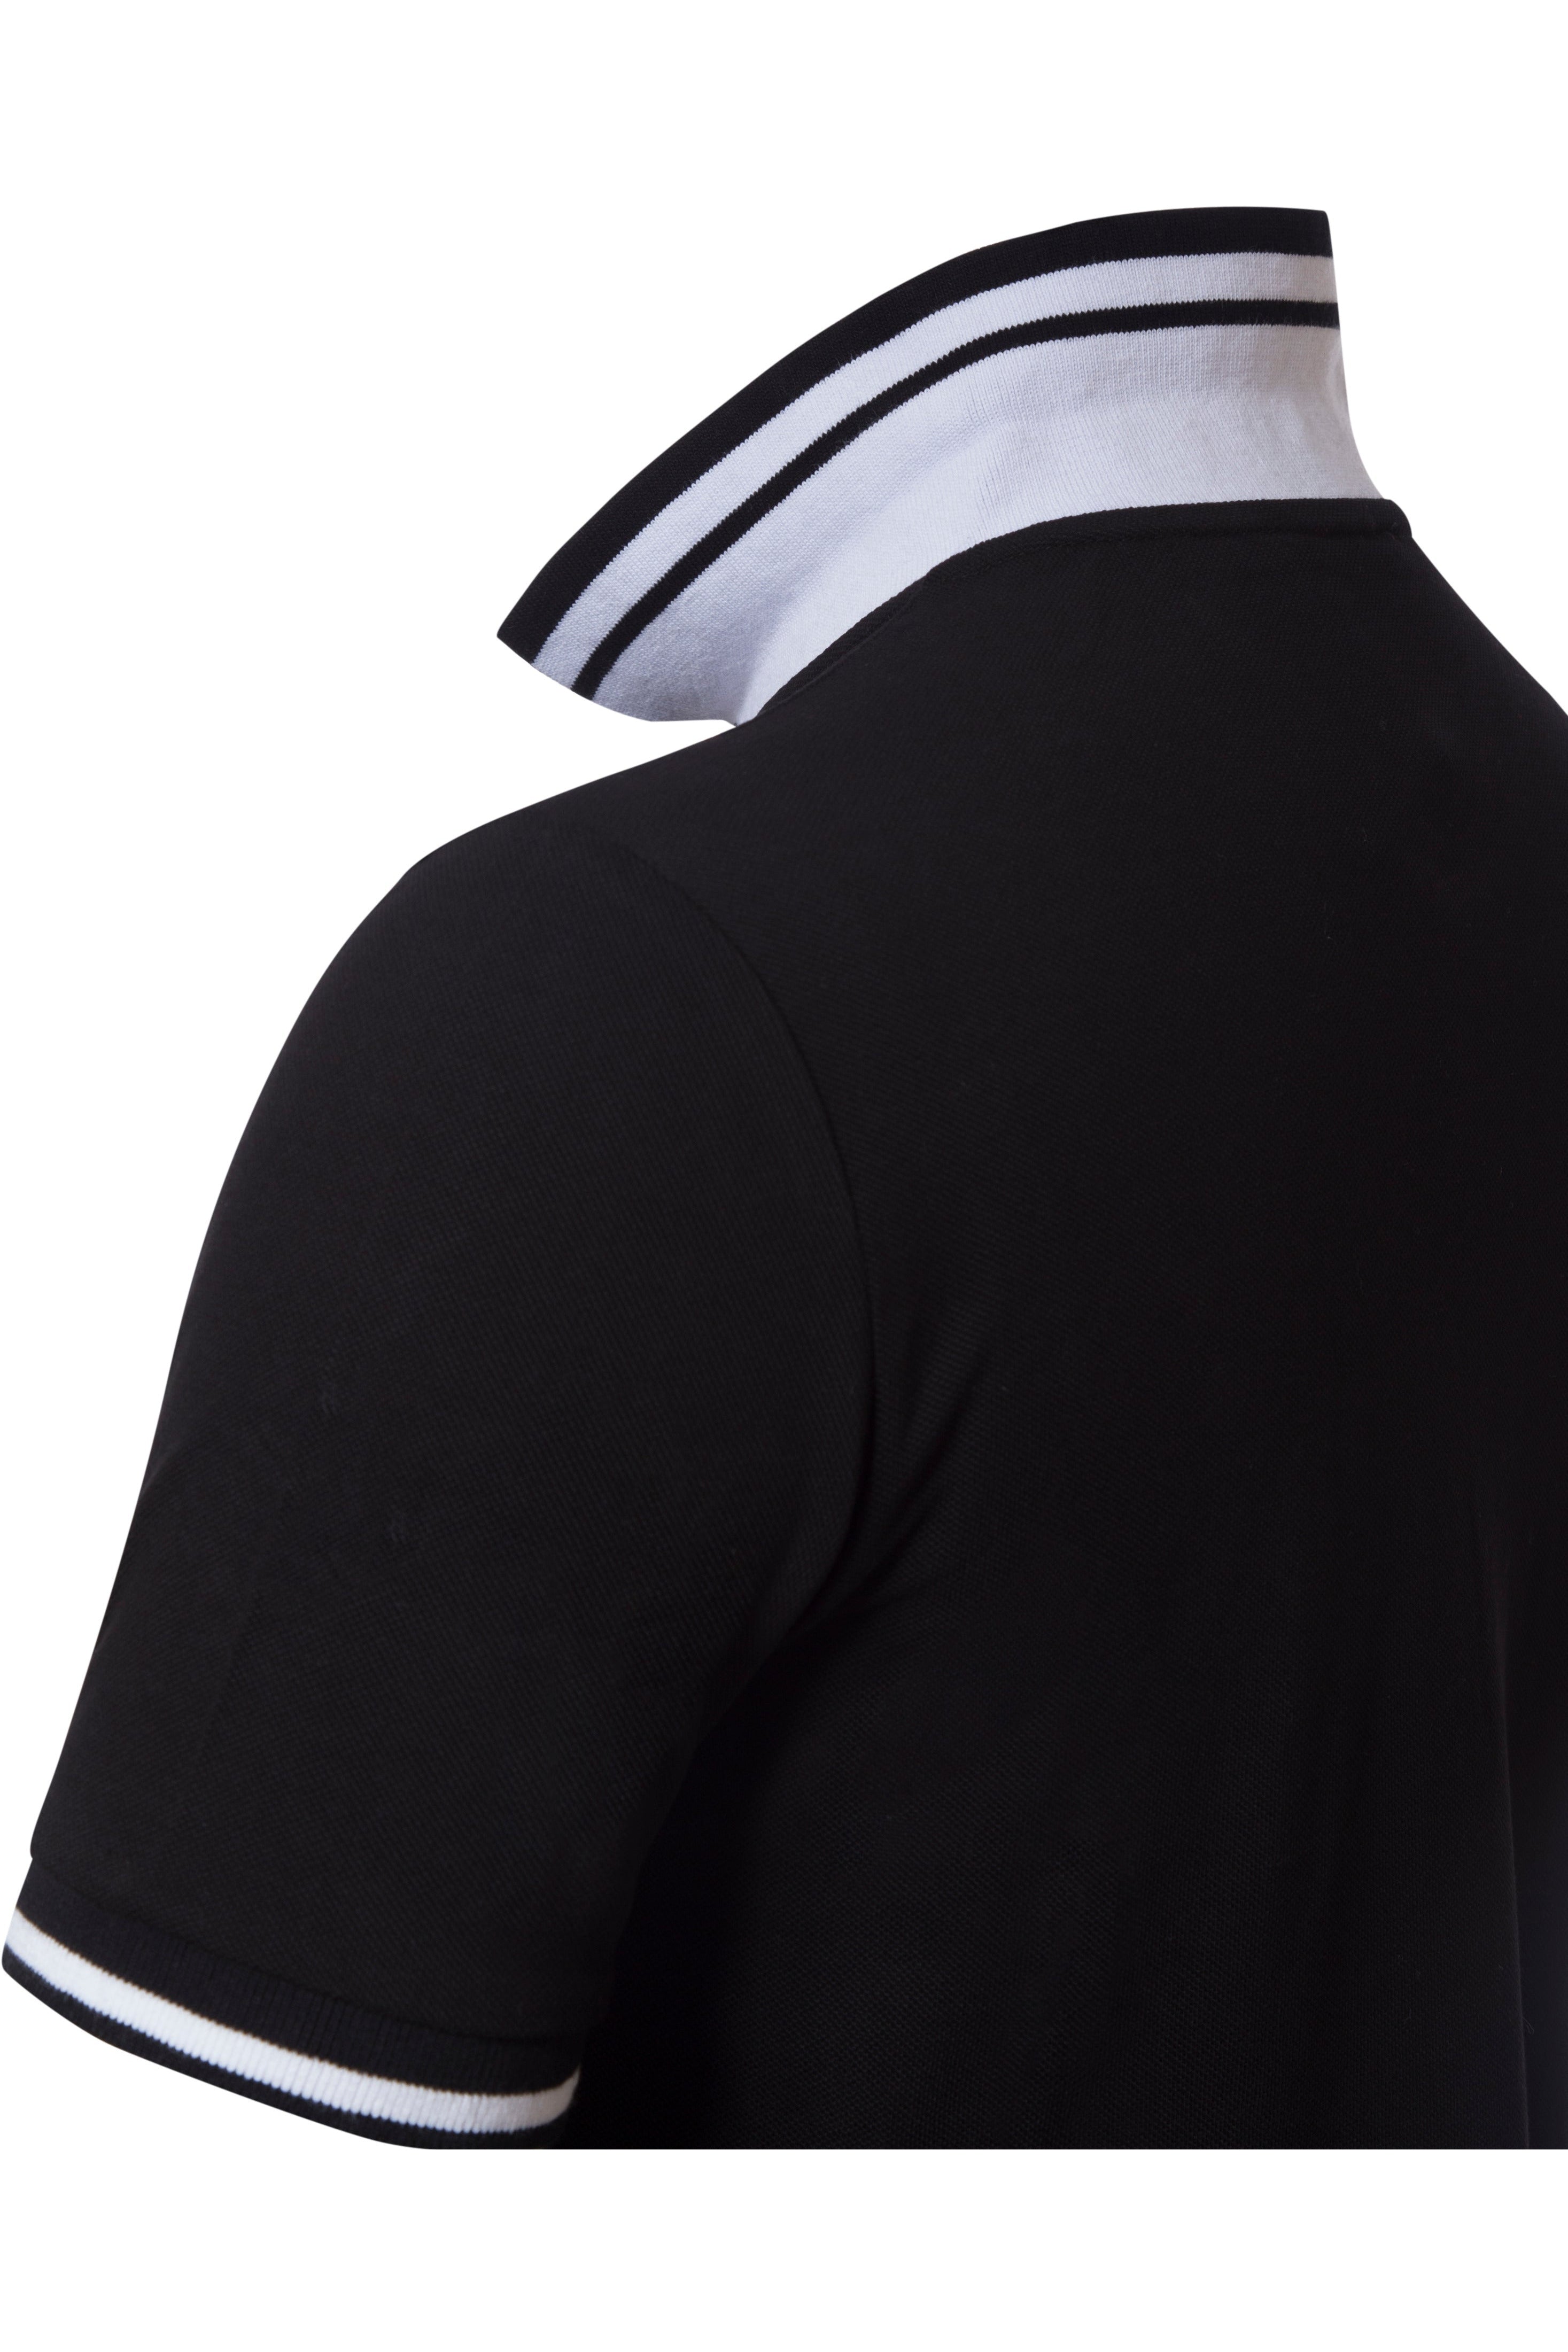 Dolce&Gabbana Black Men Polo Shirt Material Cotton